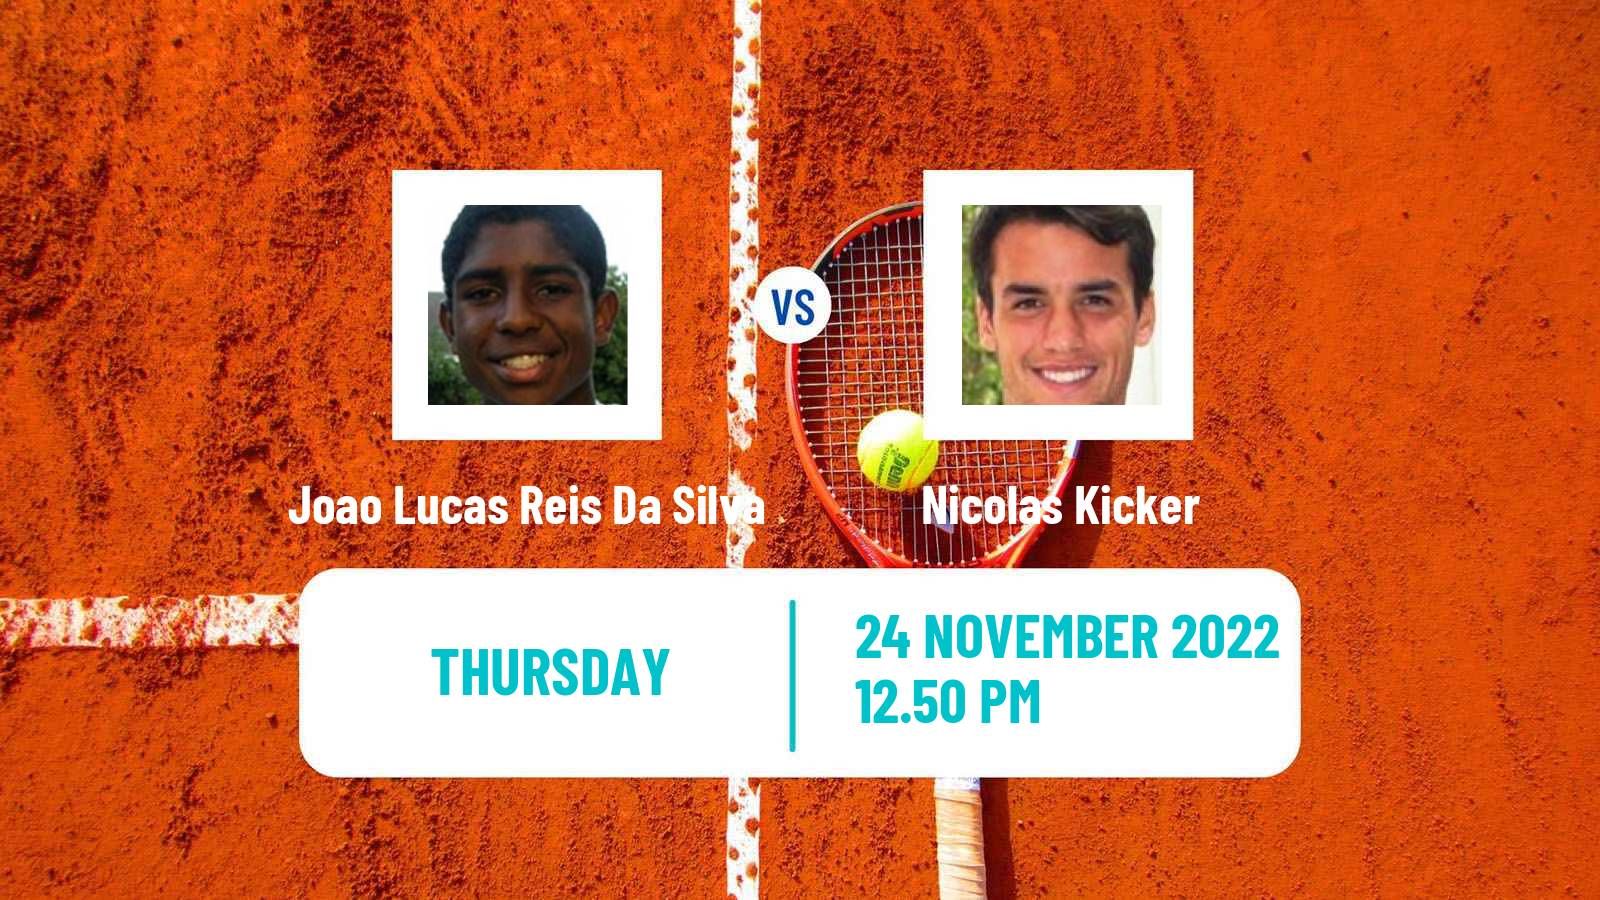 Tennis ATP Challenger Joao Lucas Reis Da Silva - Nicolas Kicker